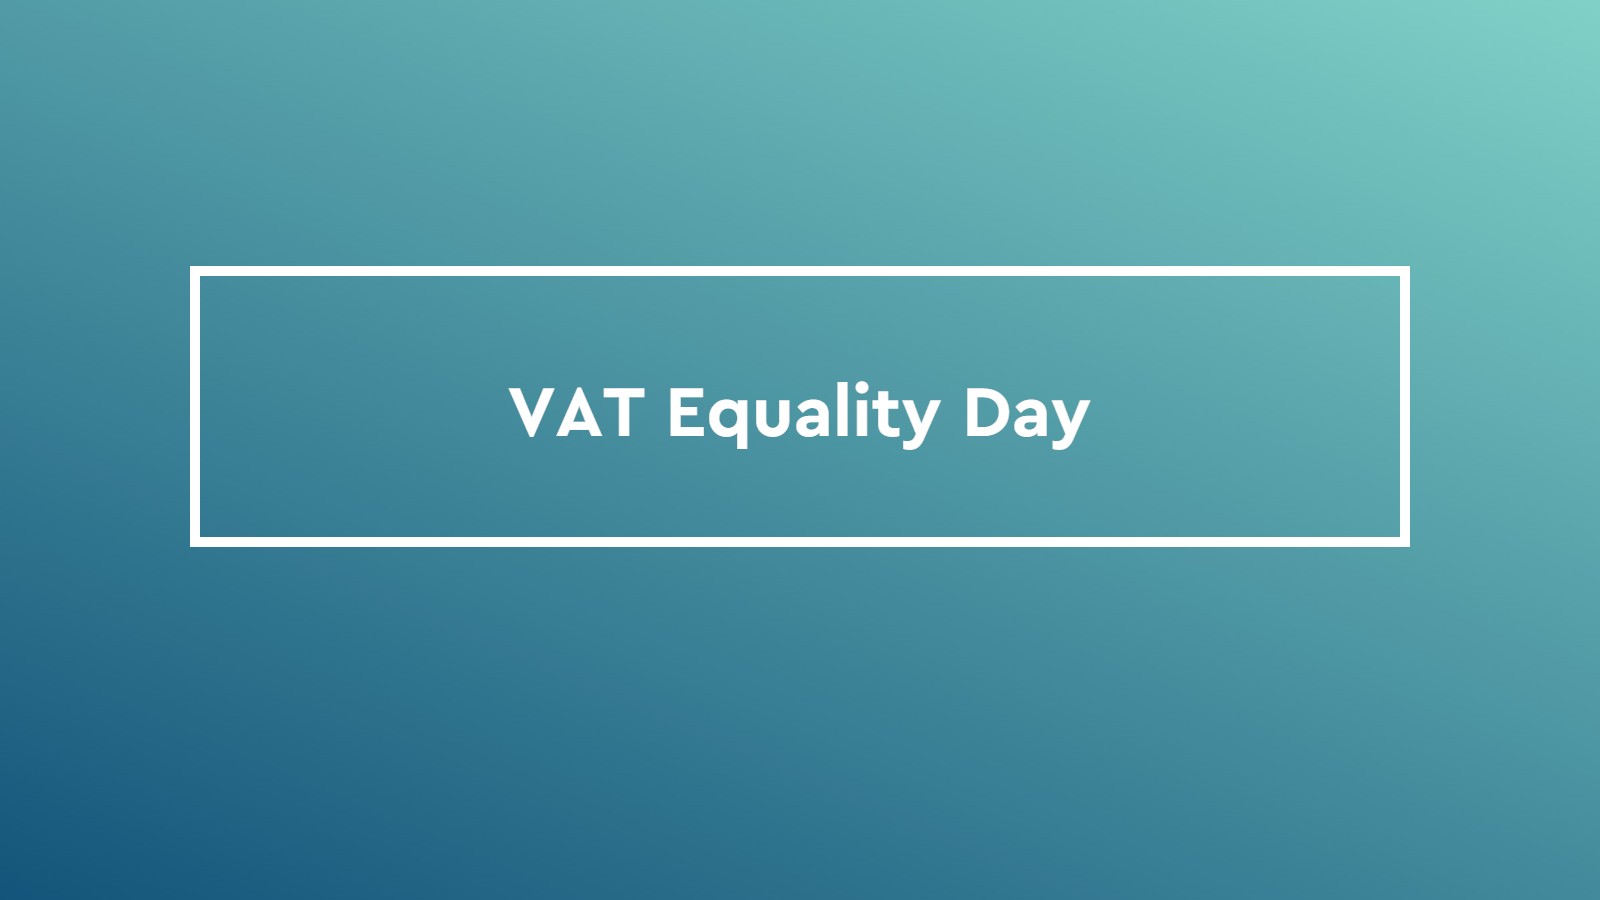 VAT Equality Day